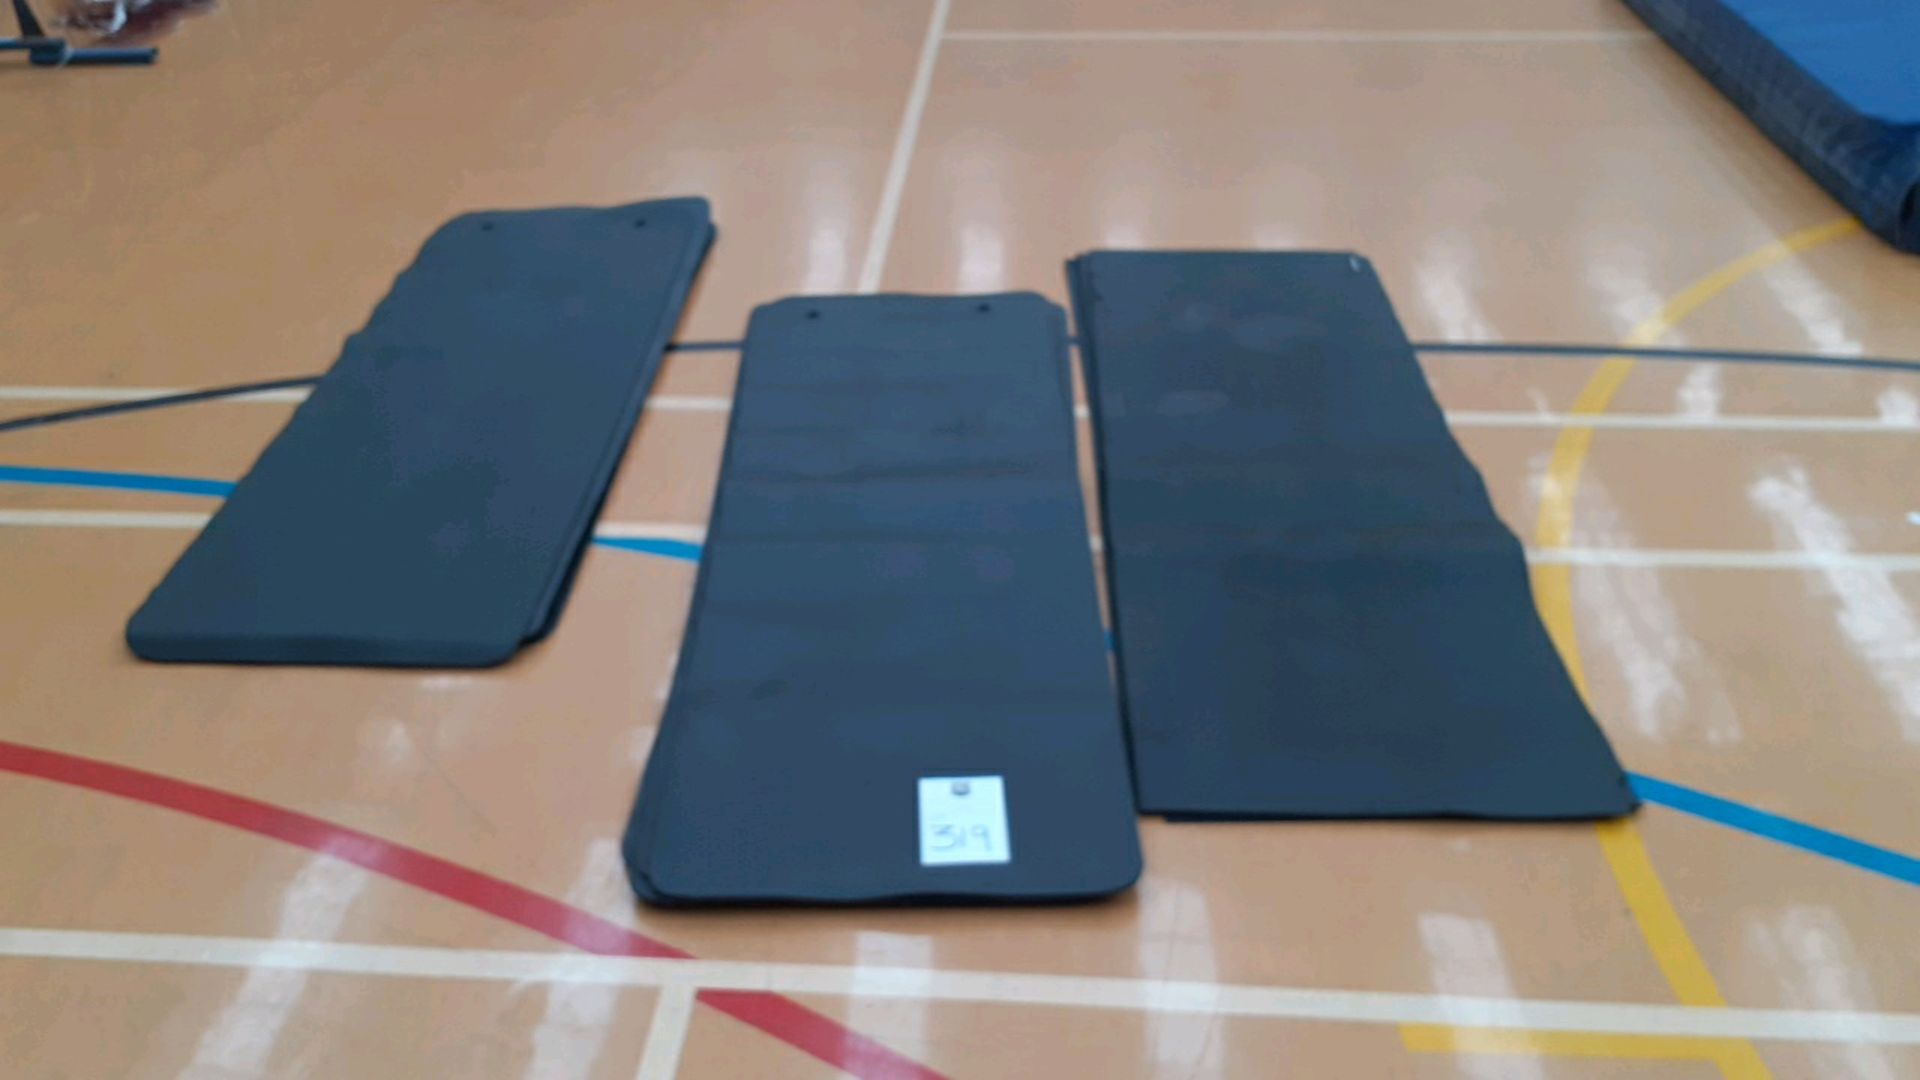 Exercise mats